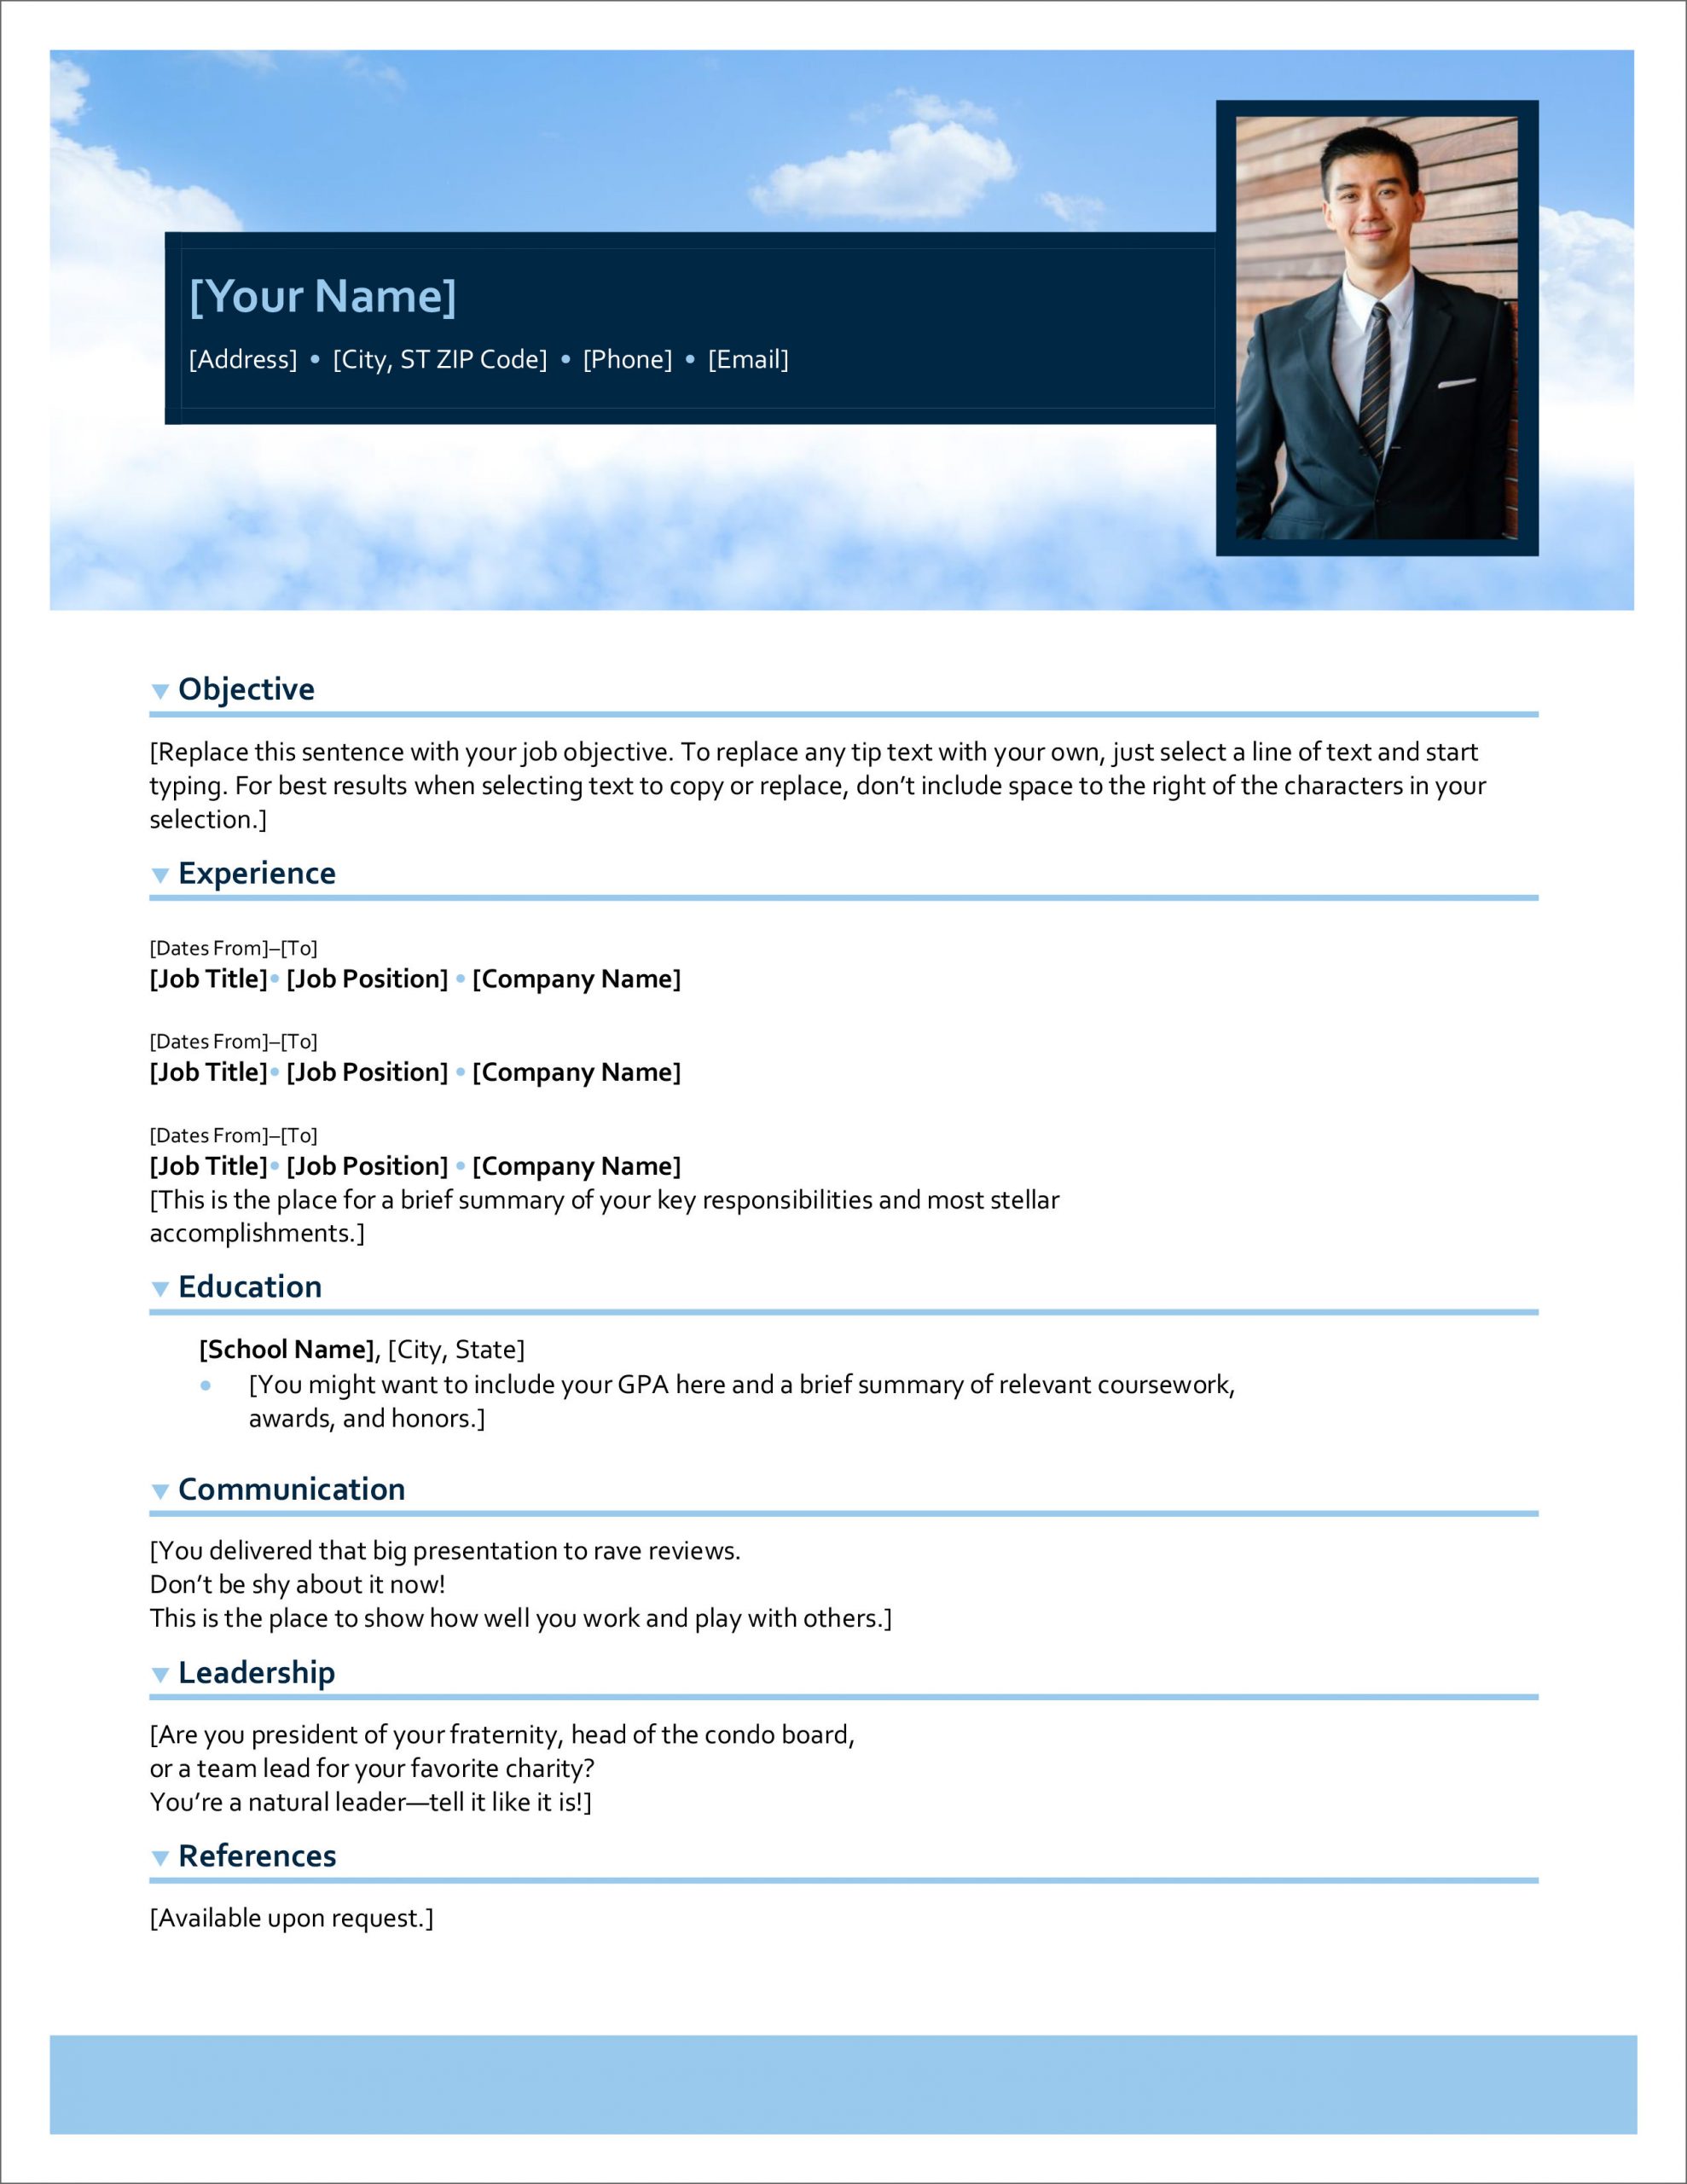 Sample Resume for Condo Board Of Directors 45 Free Modern Resume / Cv Templates – Minimalist, Simple & Clean …